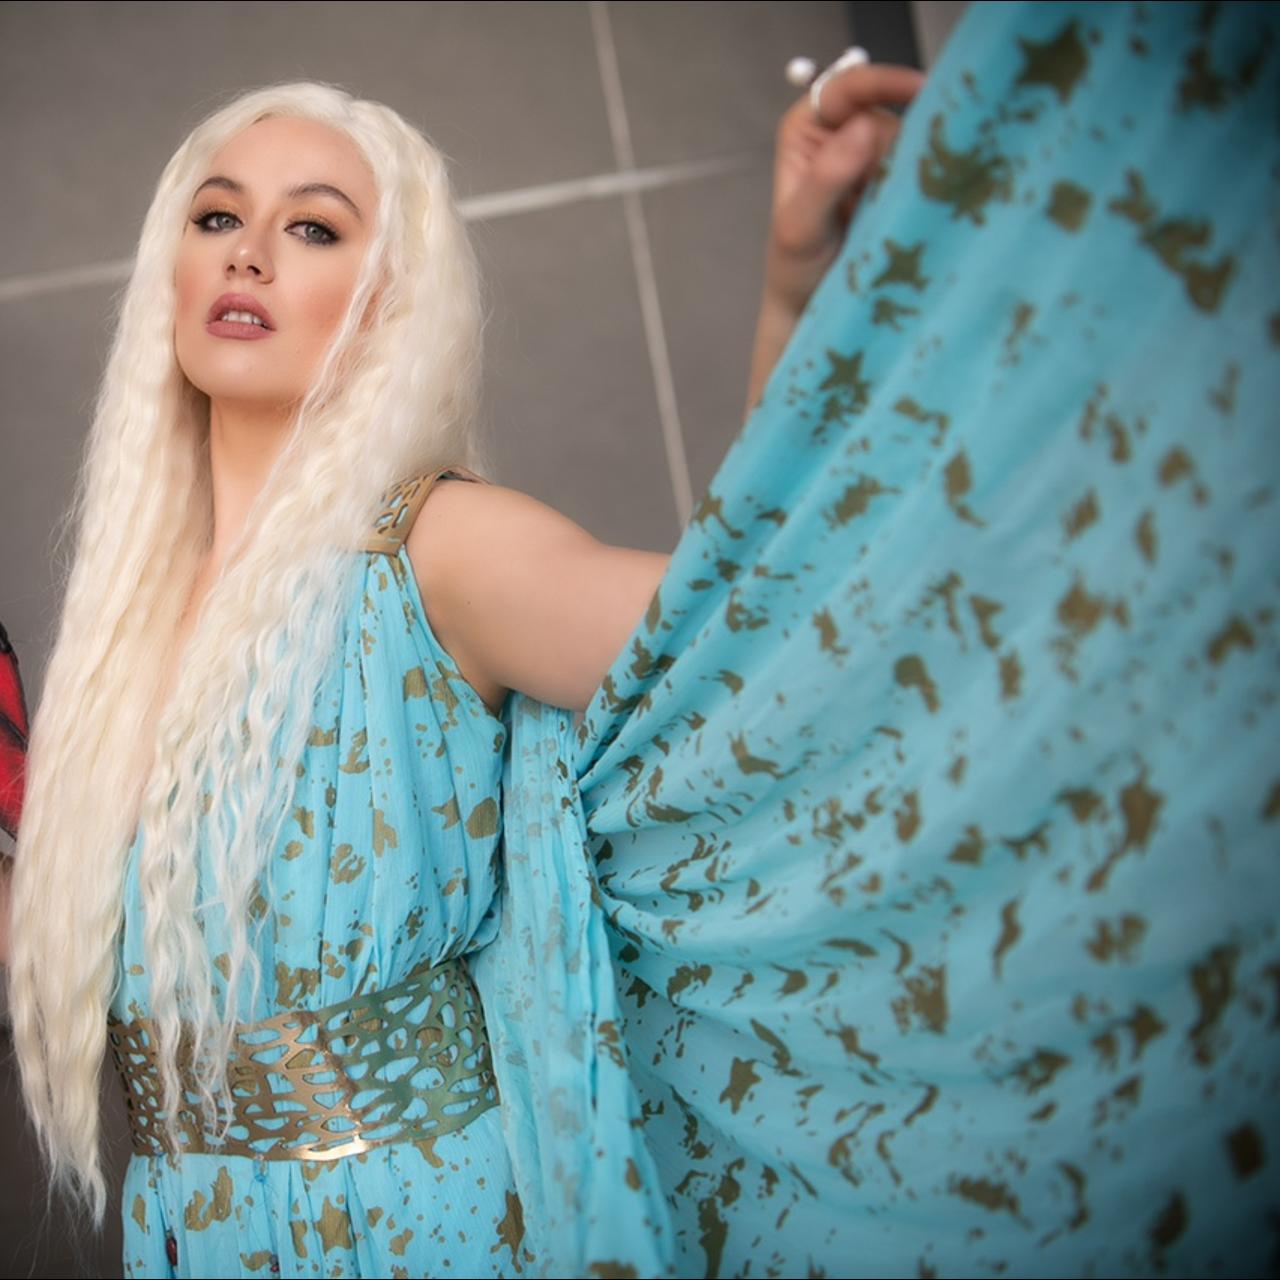 daenerys targaryen dress qarth